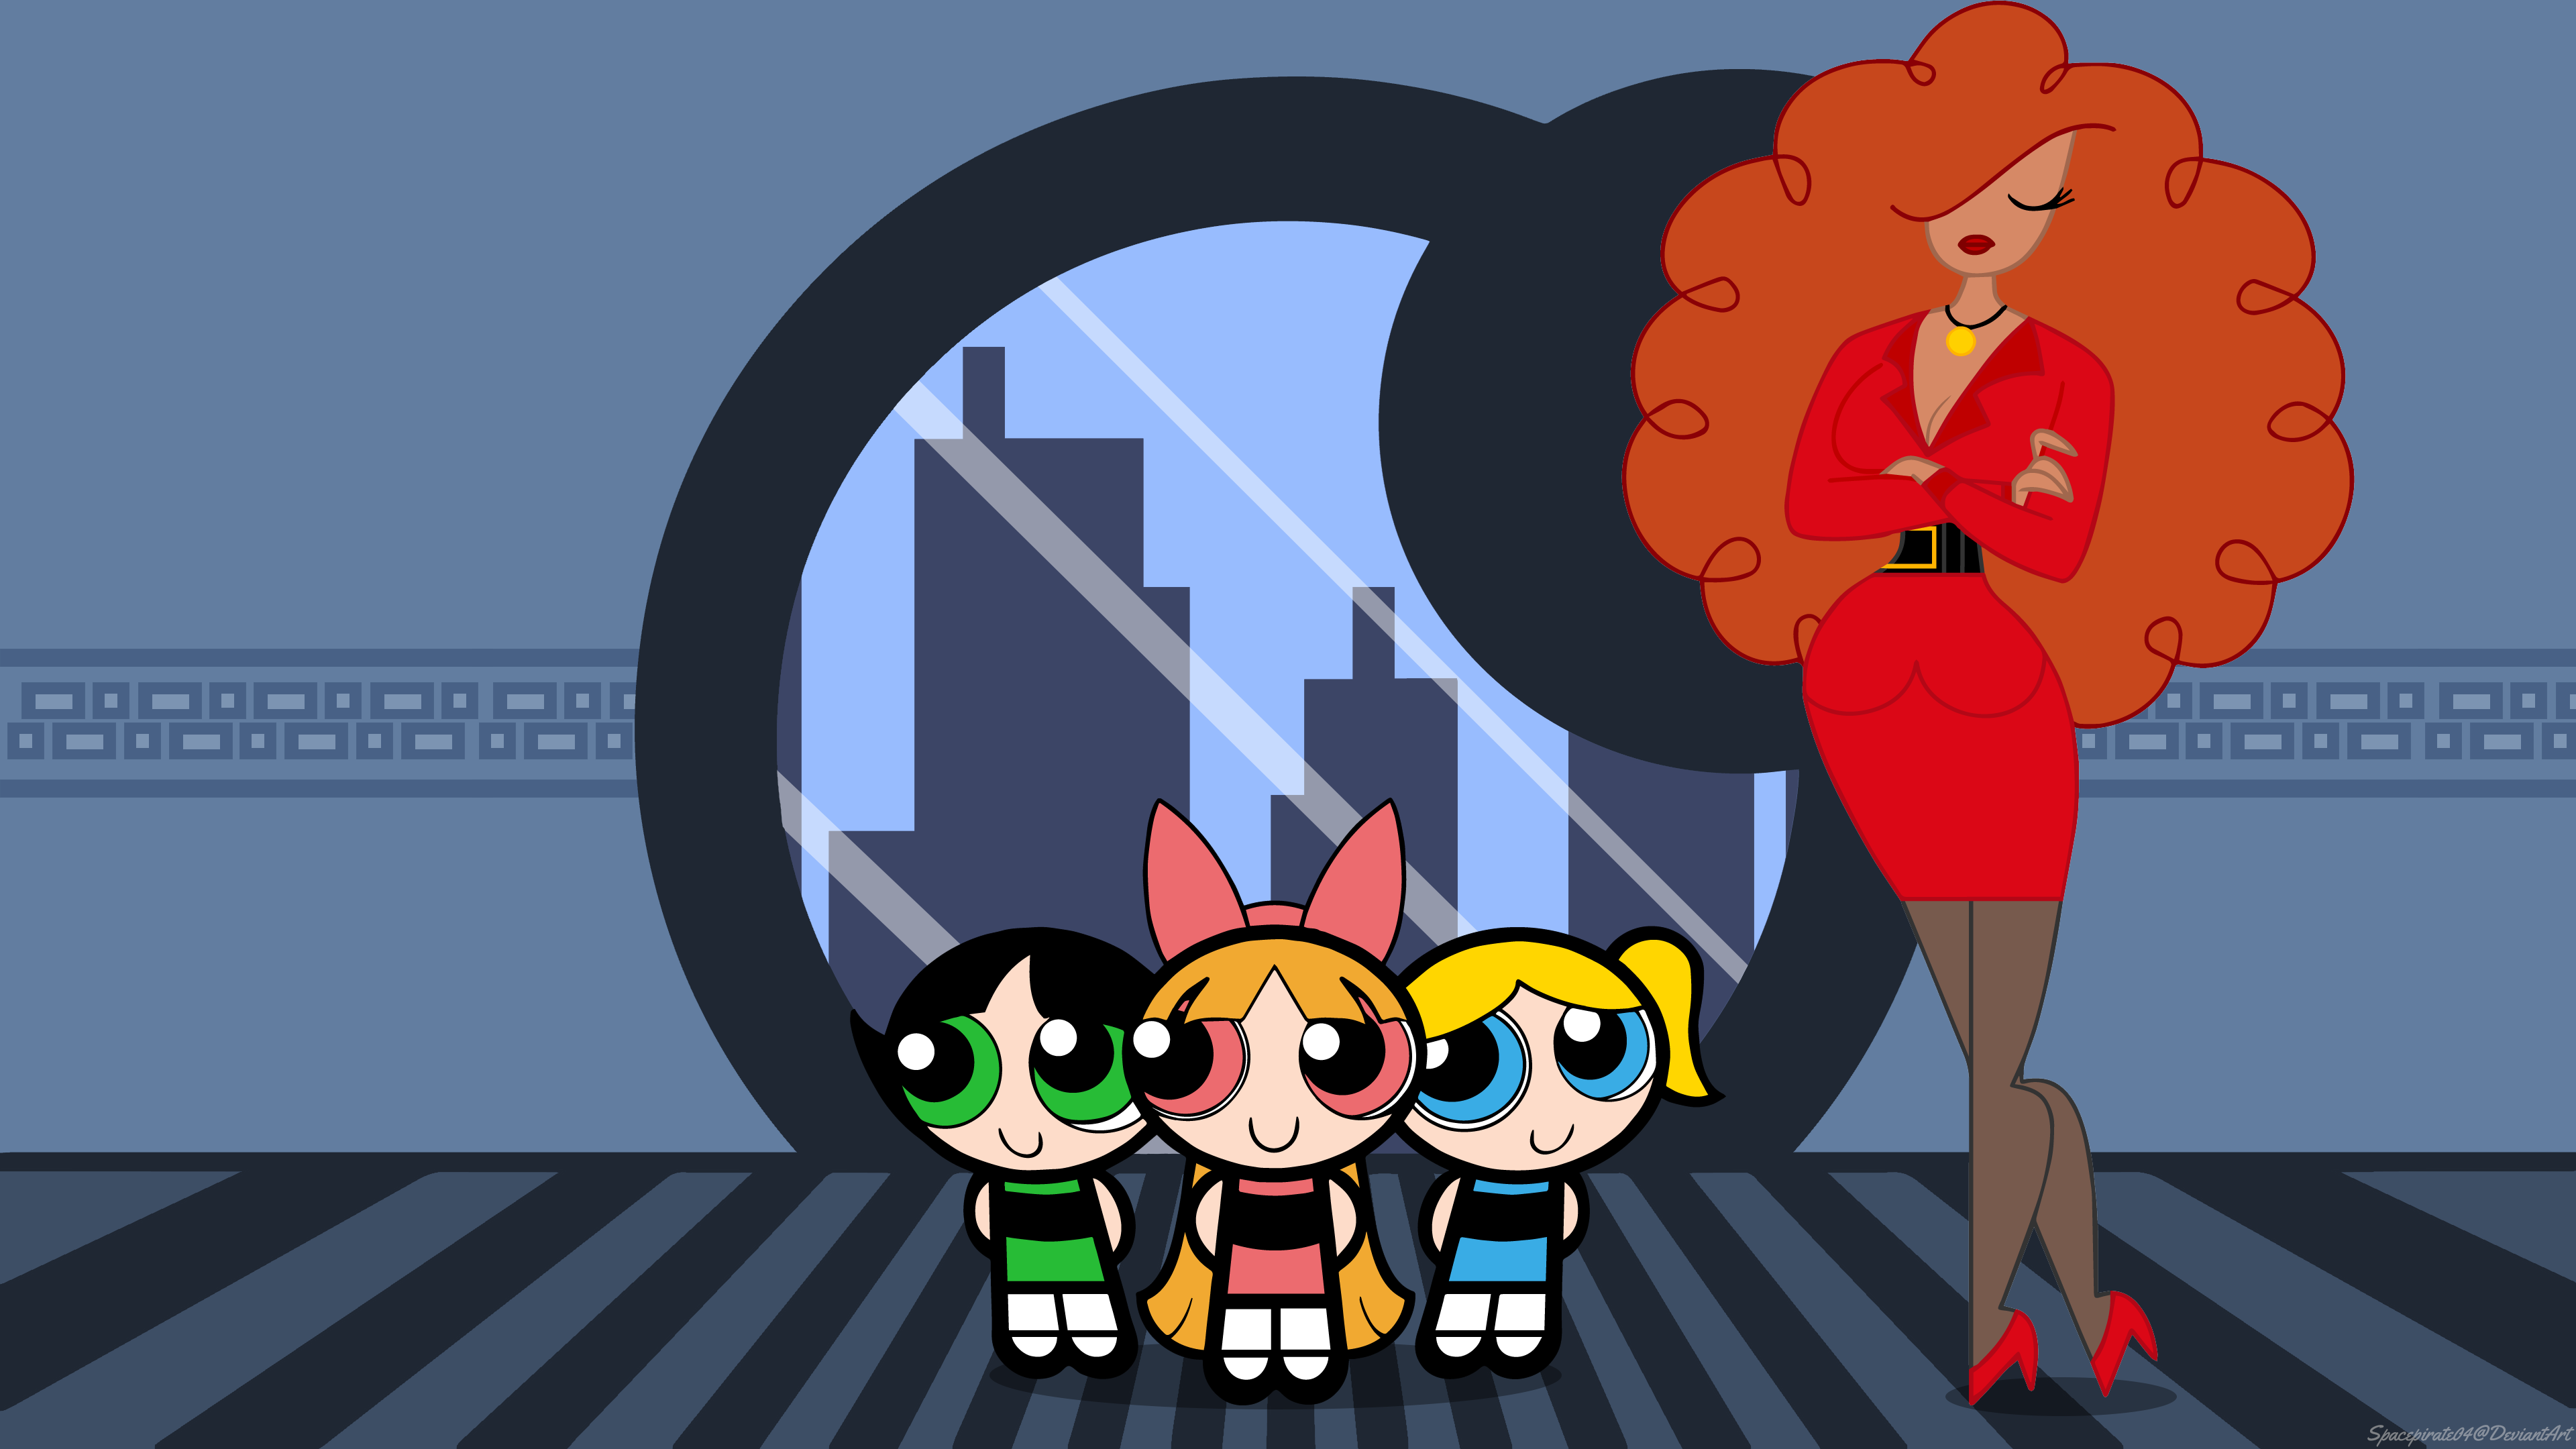 The Powerpuff Girls With Ms Bellum By Spacepirate04 On Deviantart